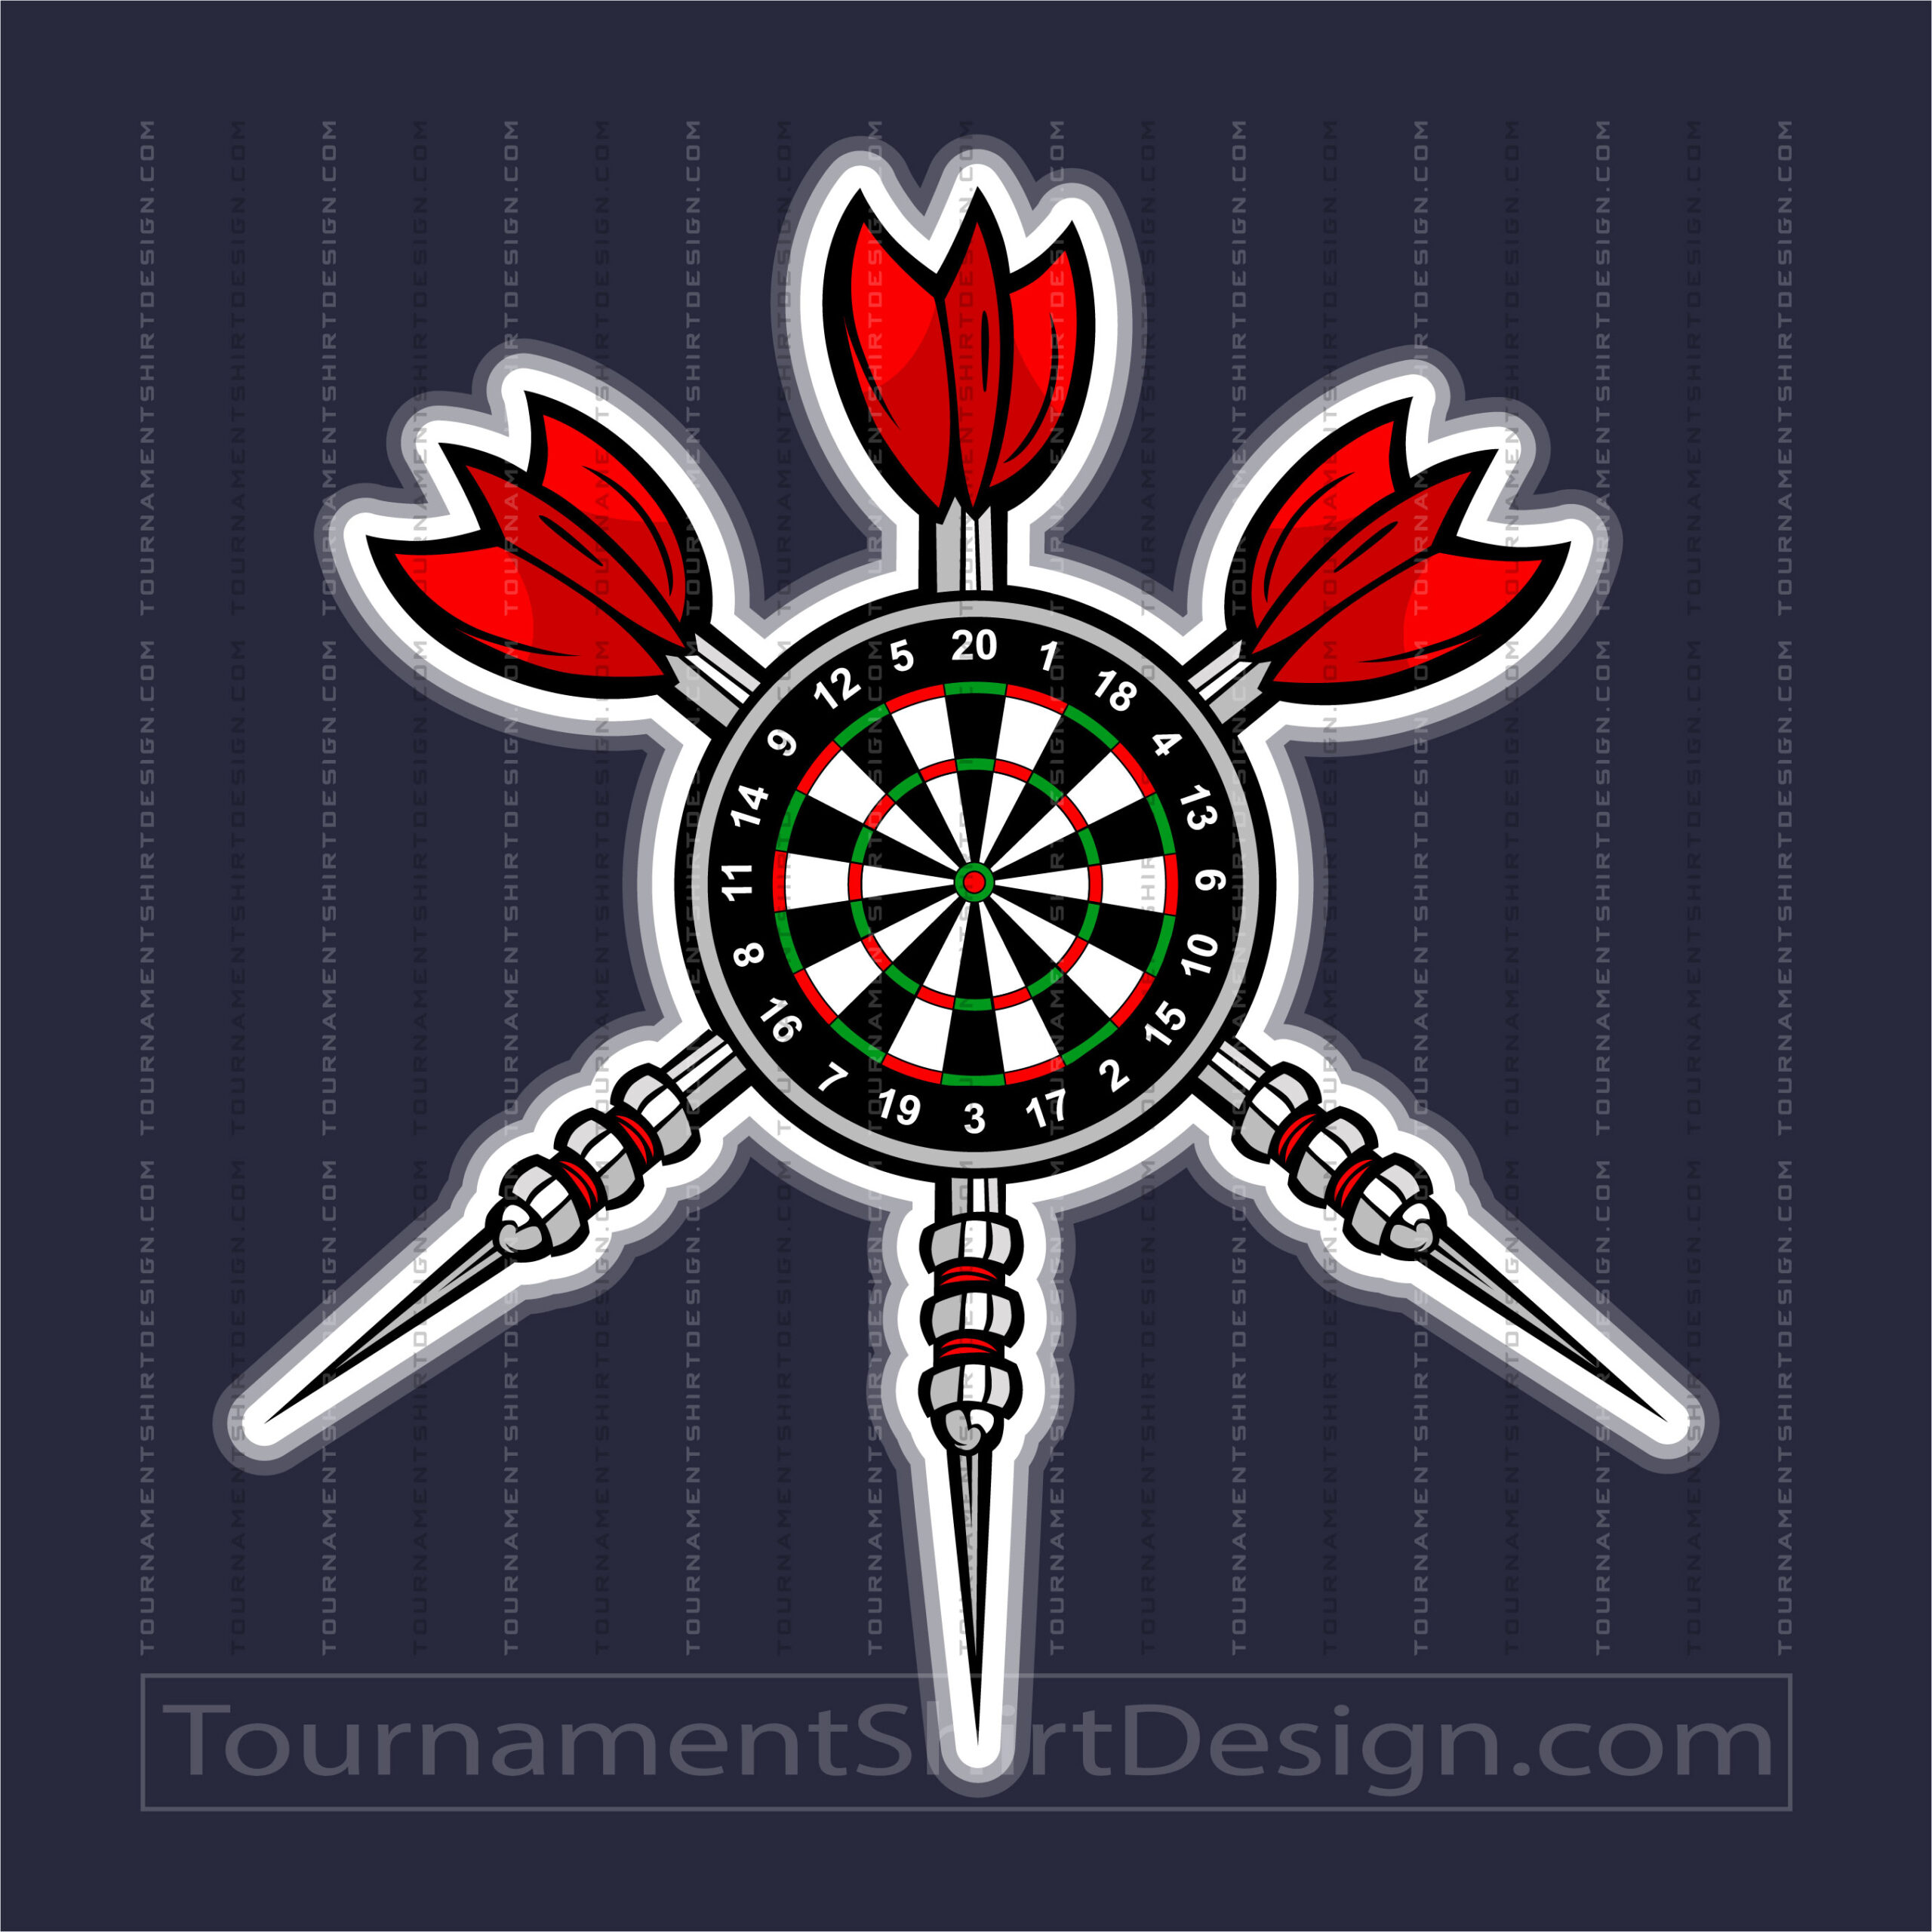 Darts Logo